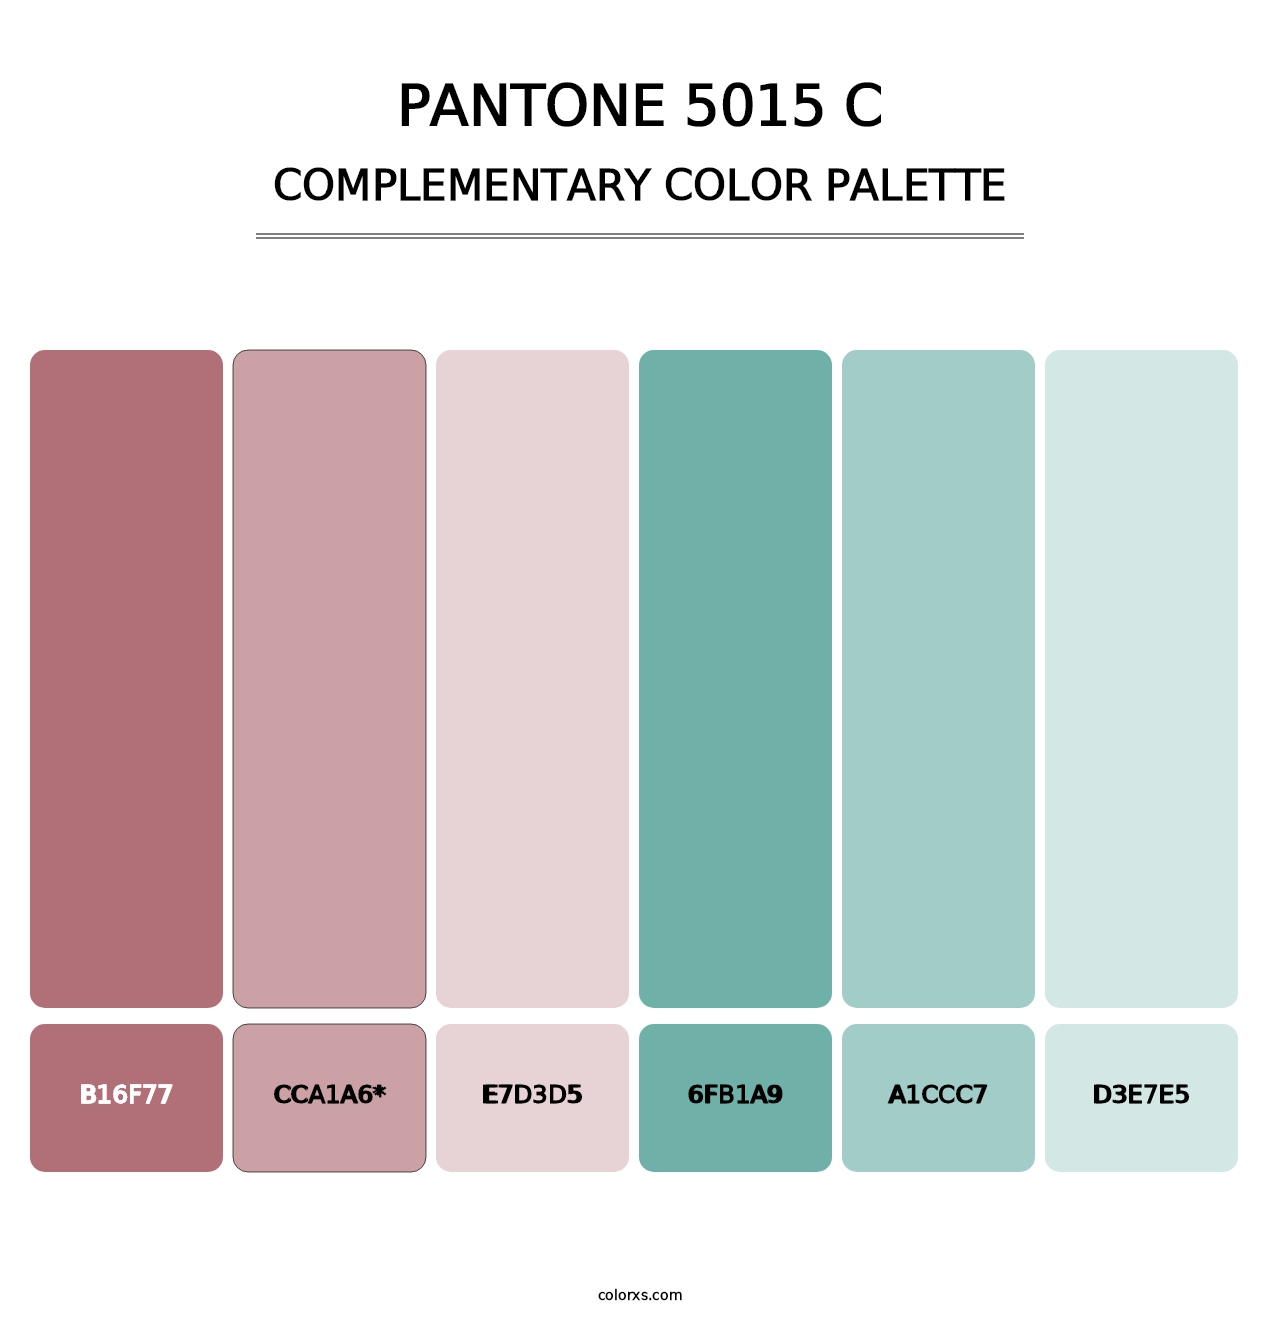 PANTONE 5015 C - Complementary Color Palette